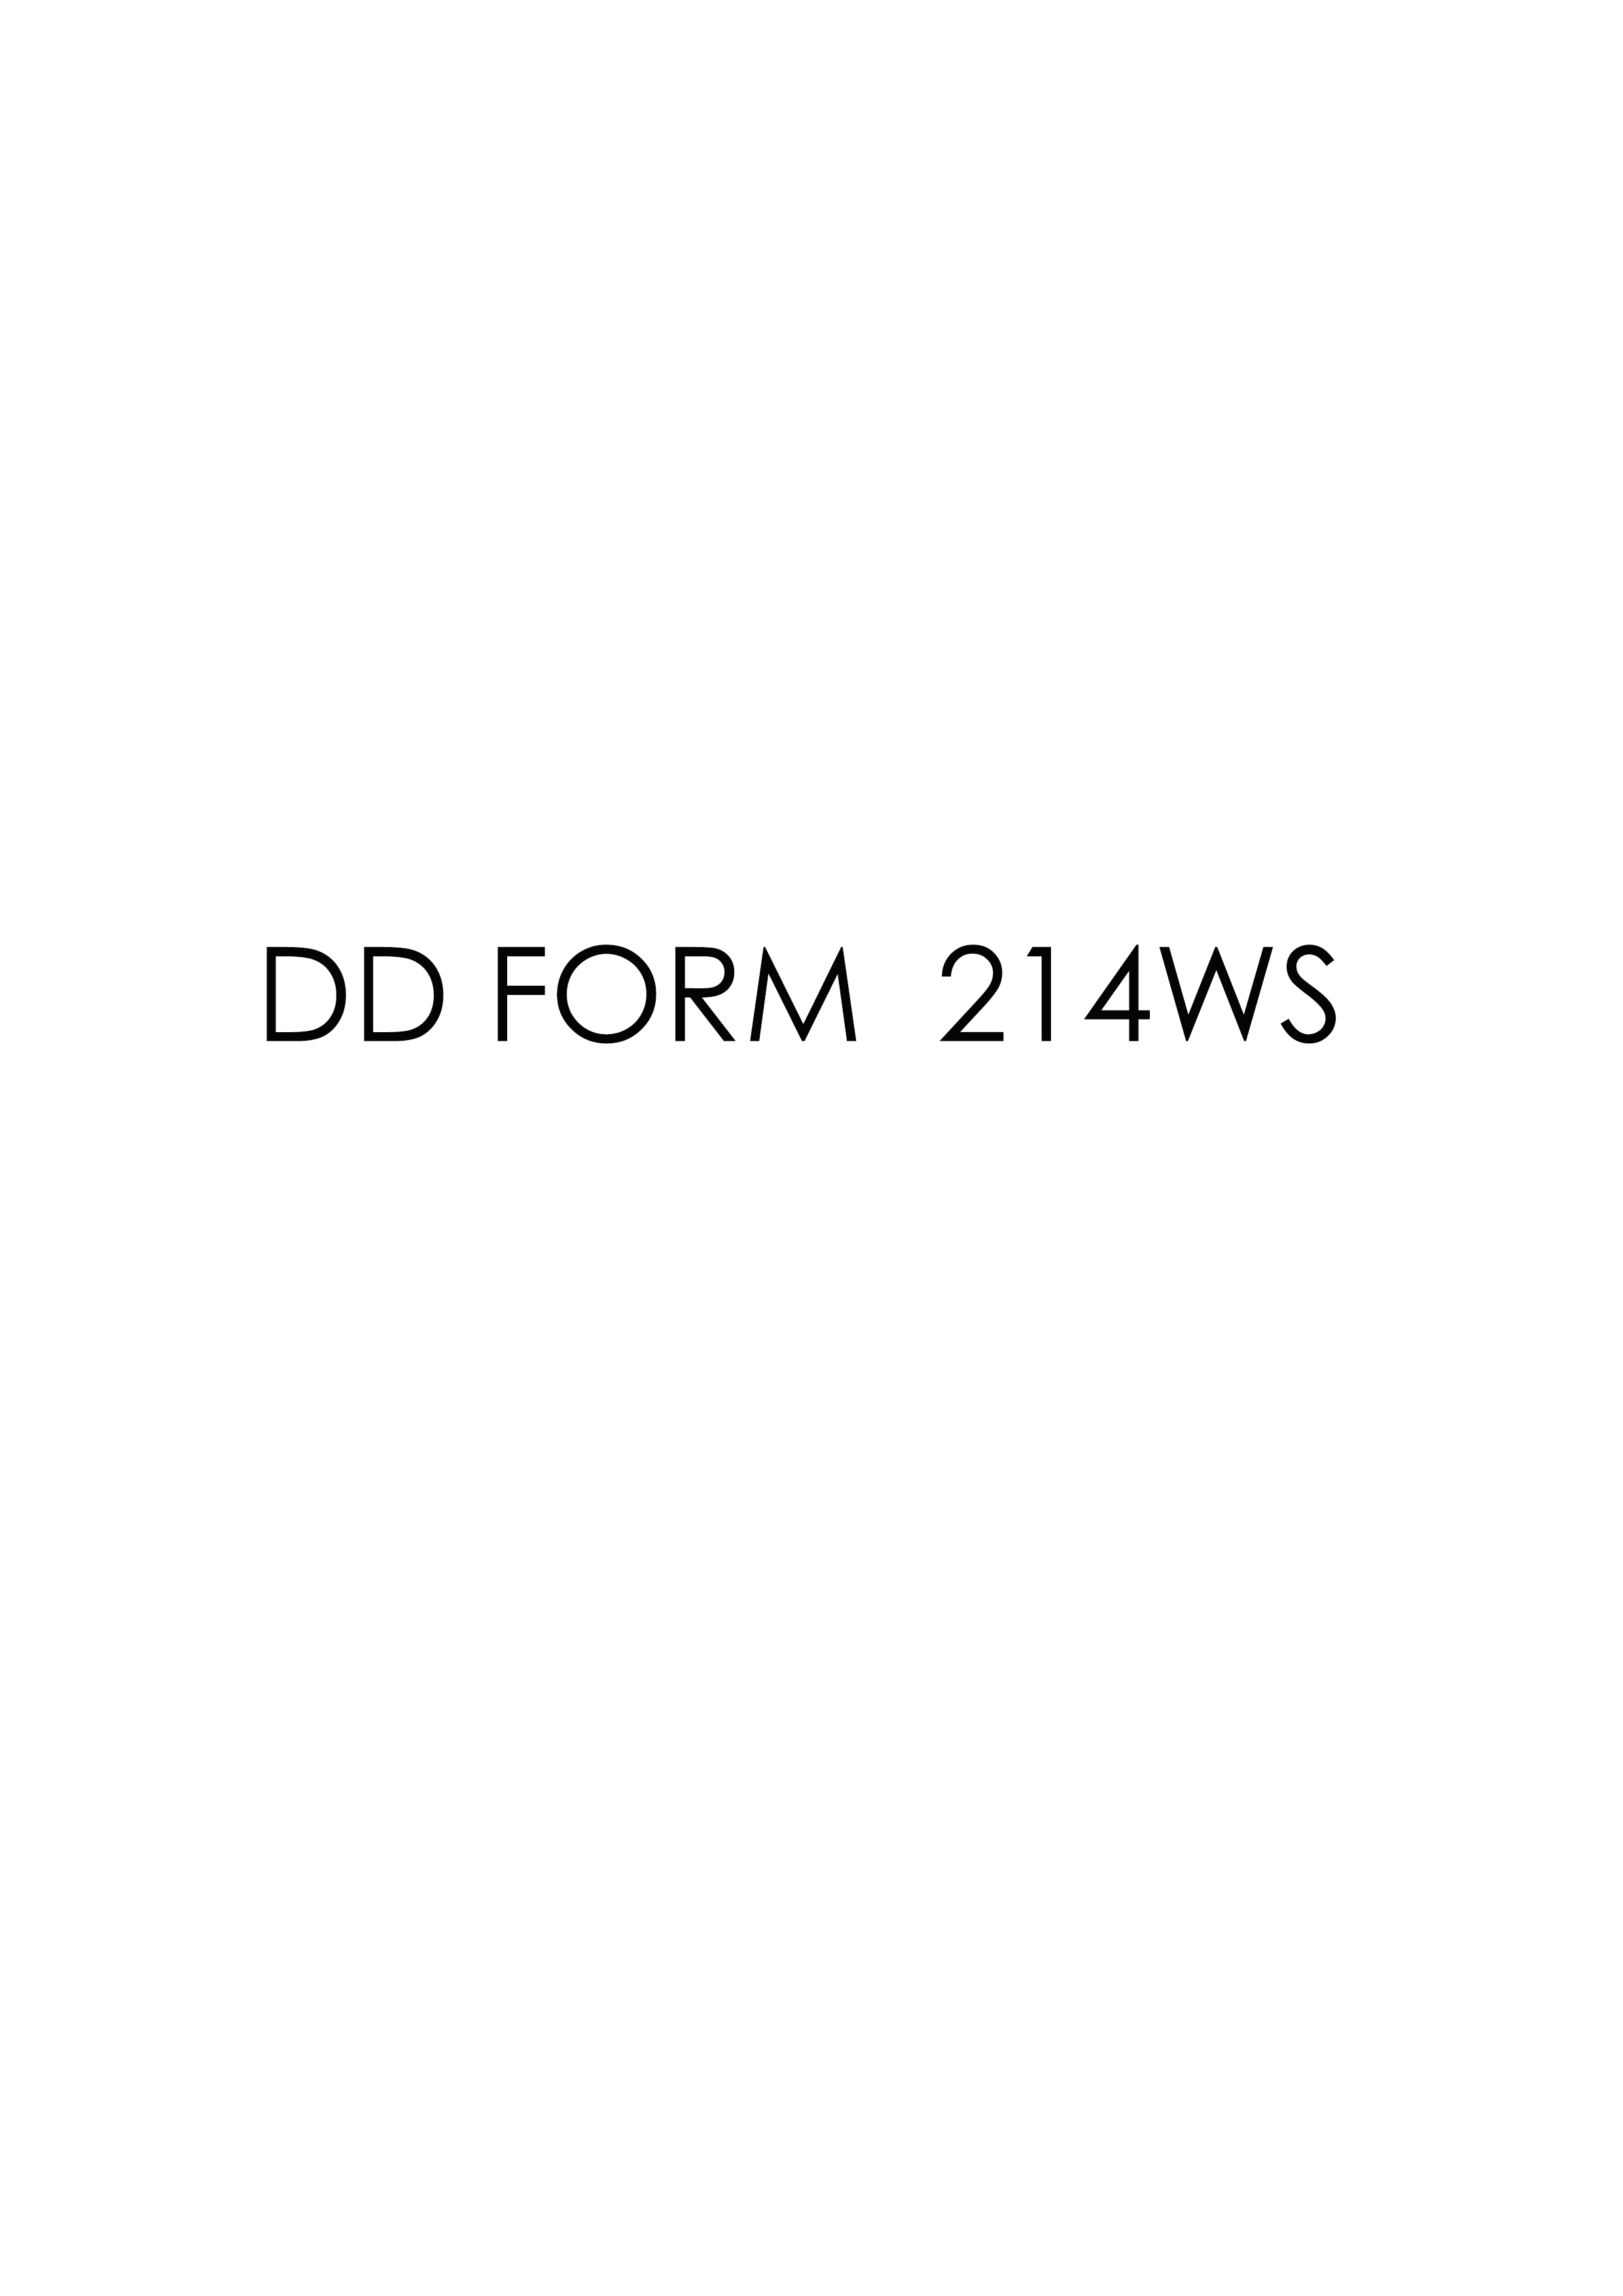 Download dd 214WS Form